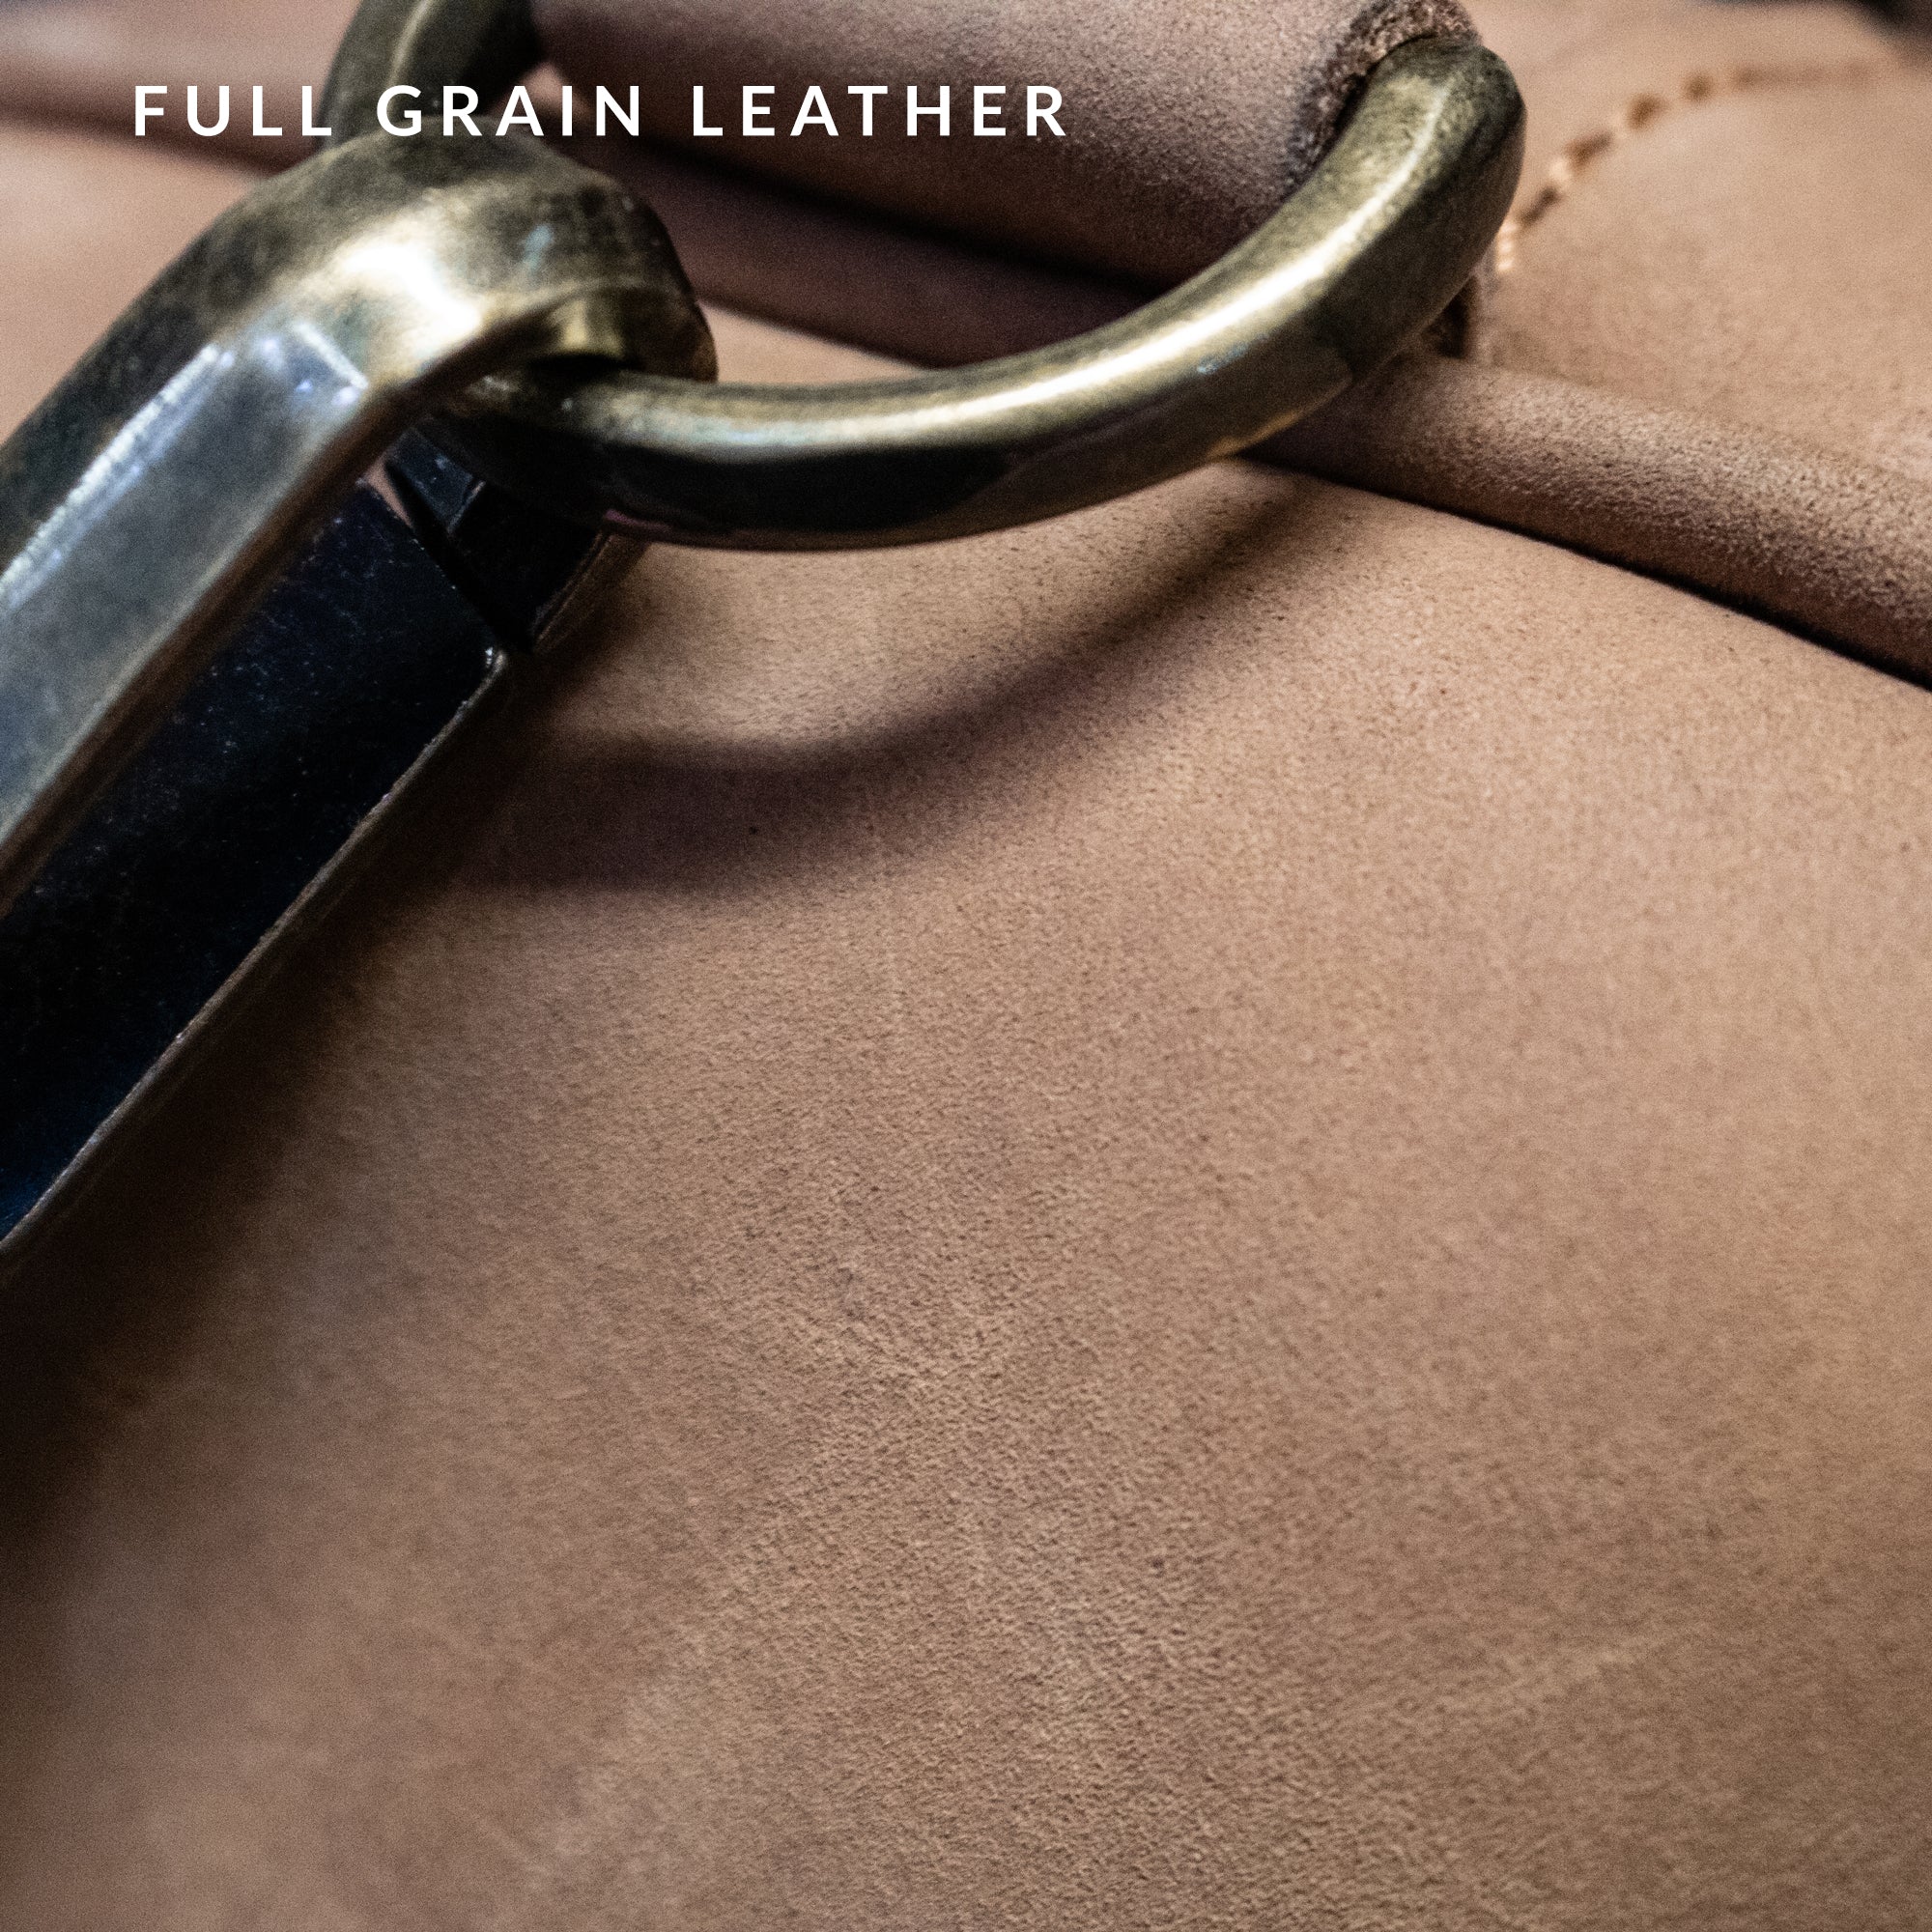 Handbag Dry Cleaning  Handbag Spa - The Leather Laundry